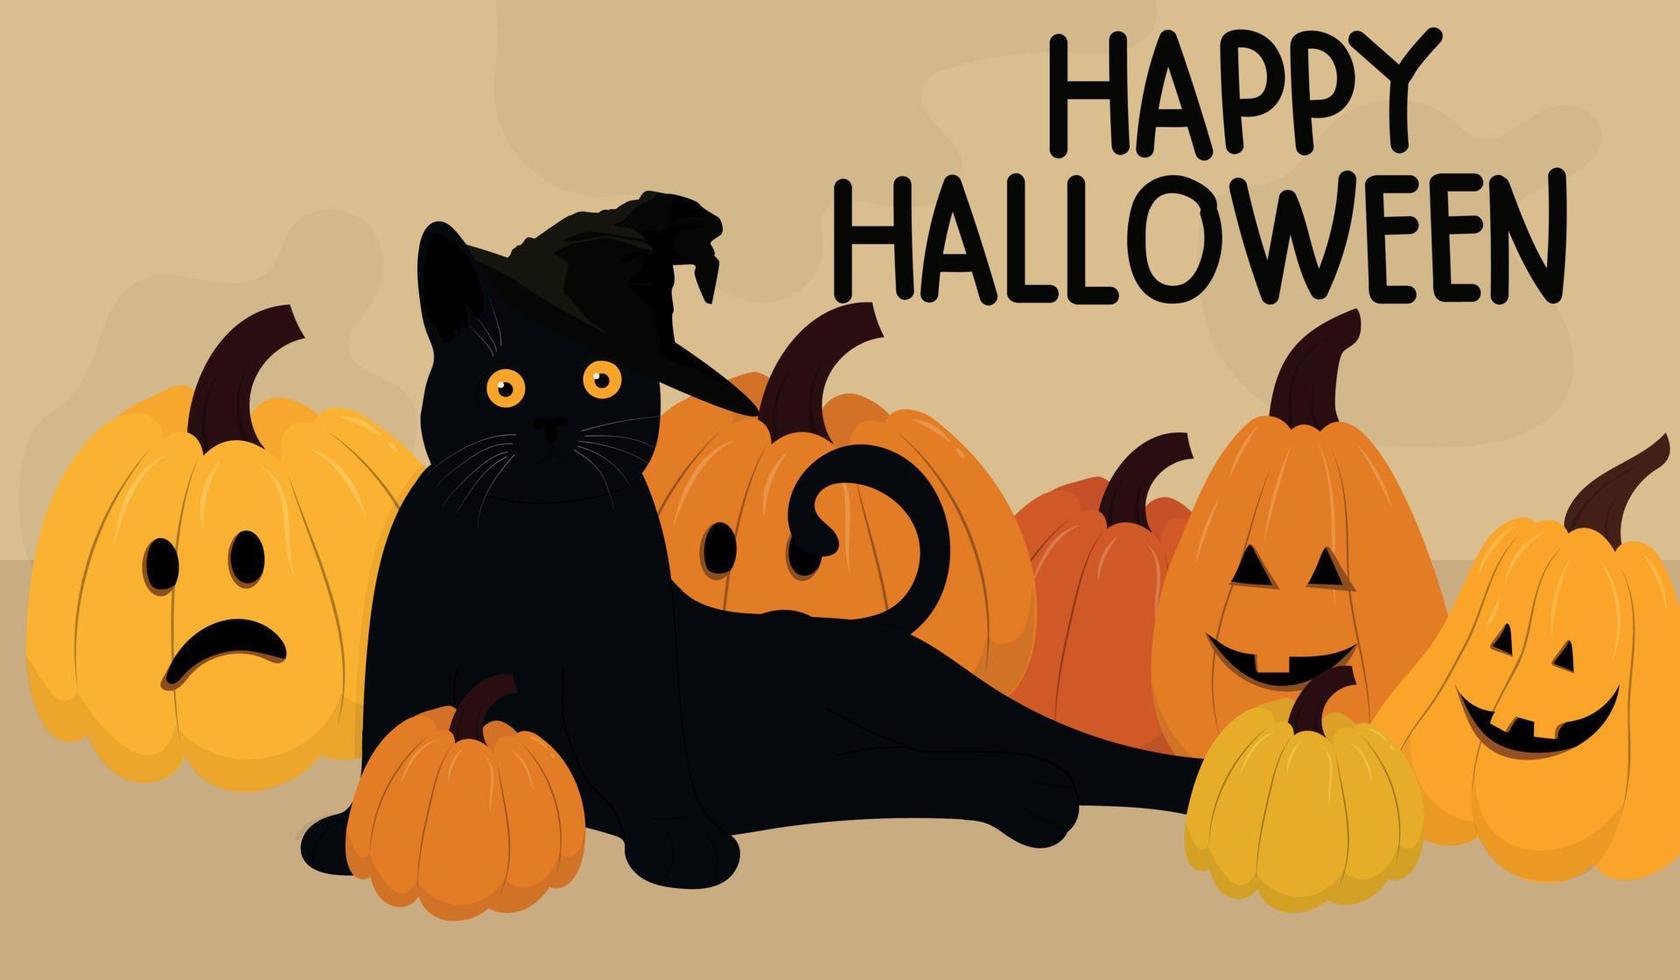 Halloween banner with cat and pumpkins vector